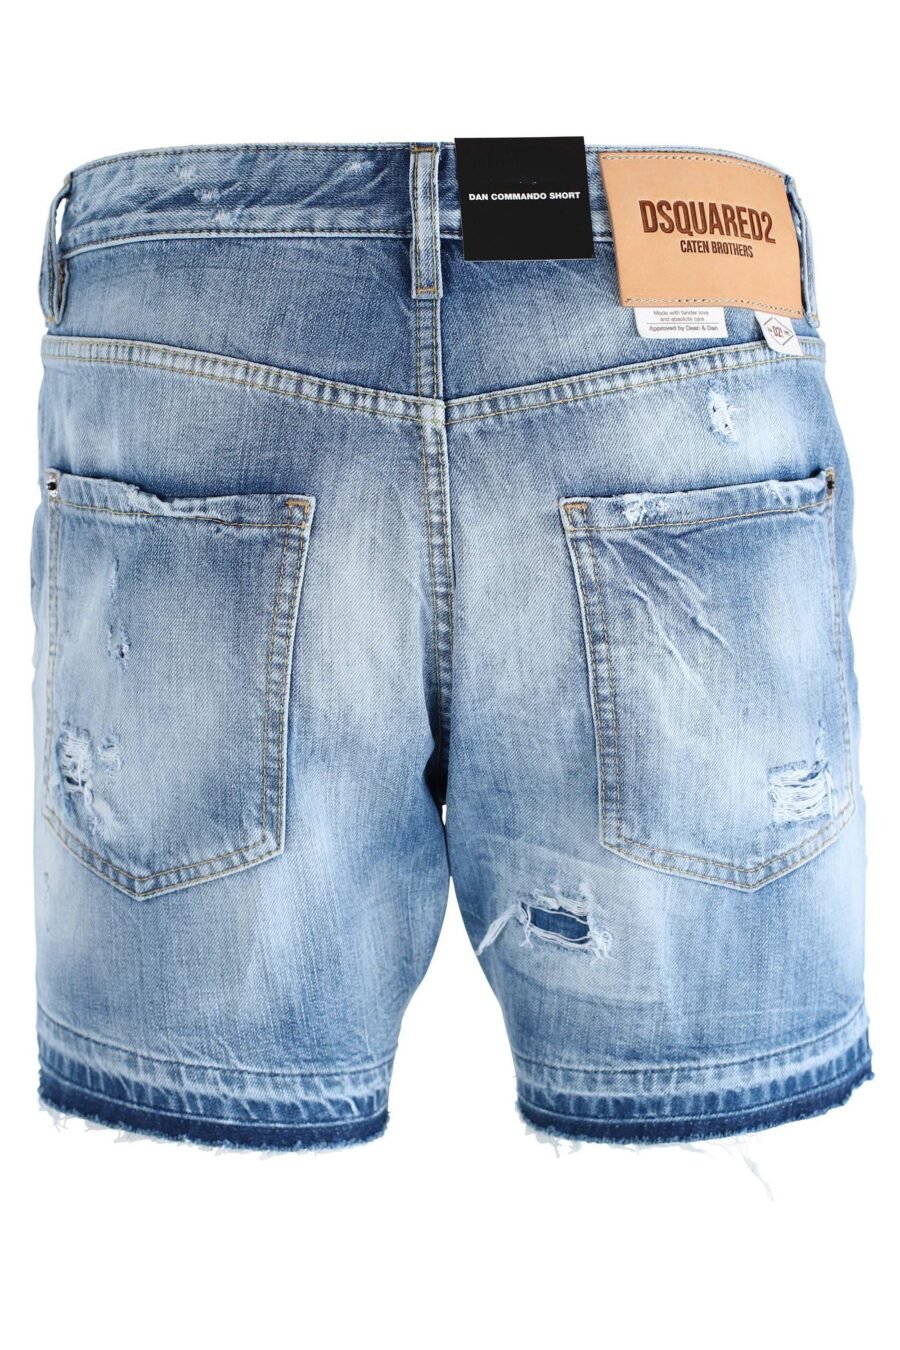 Commando Denim Shorts hellblau getragene Denim Shorts - IMG 1626